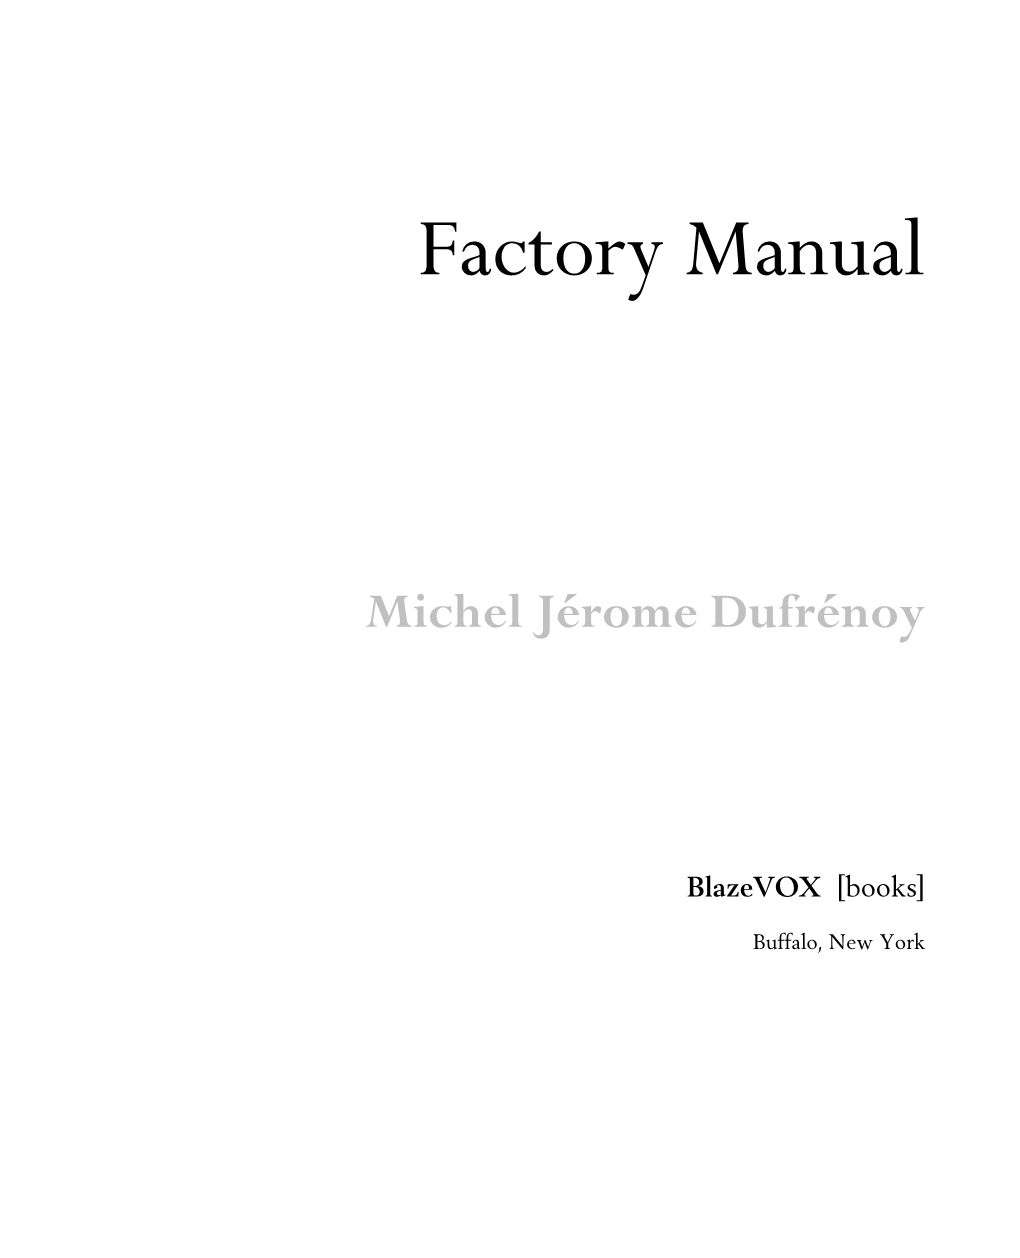 Factory Manual by Michel Jérome Dufrénoy